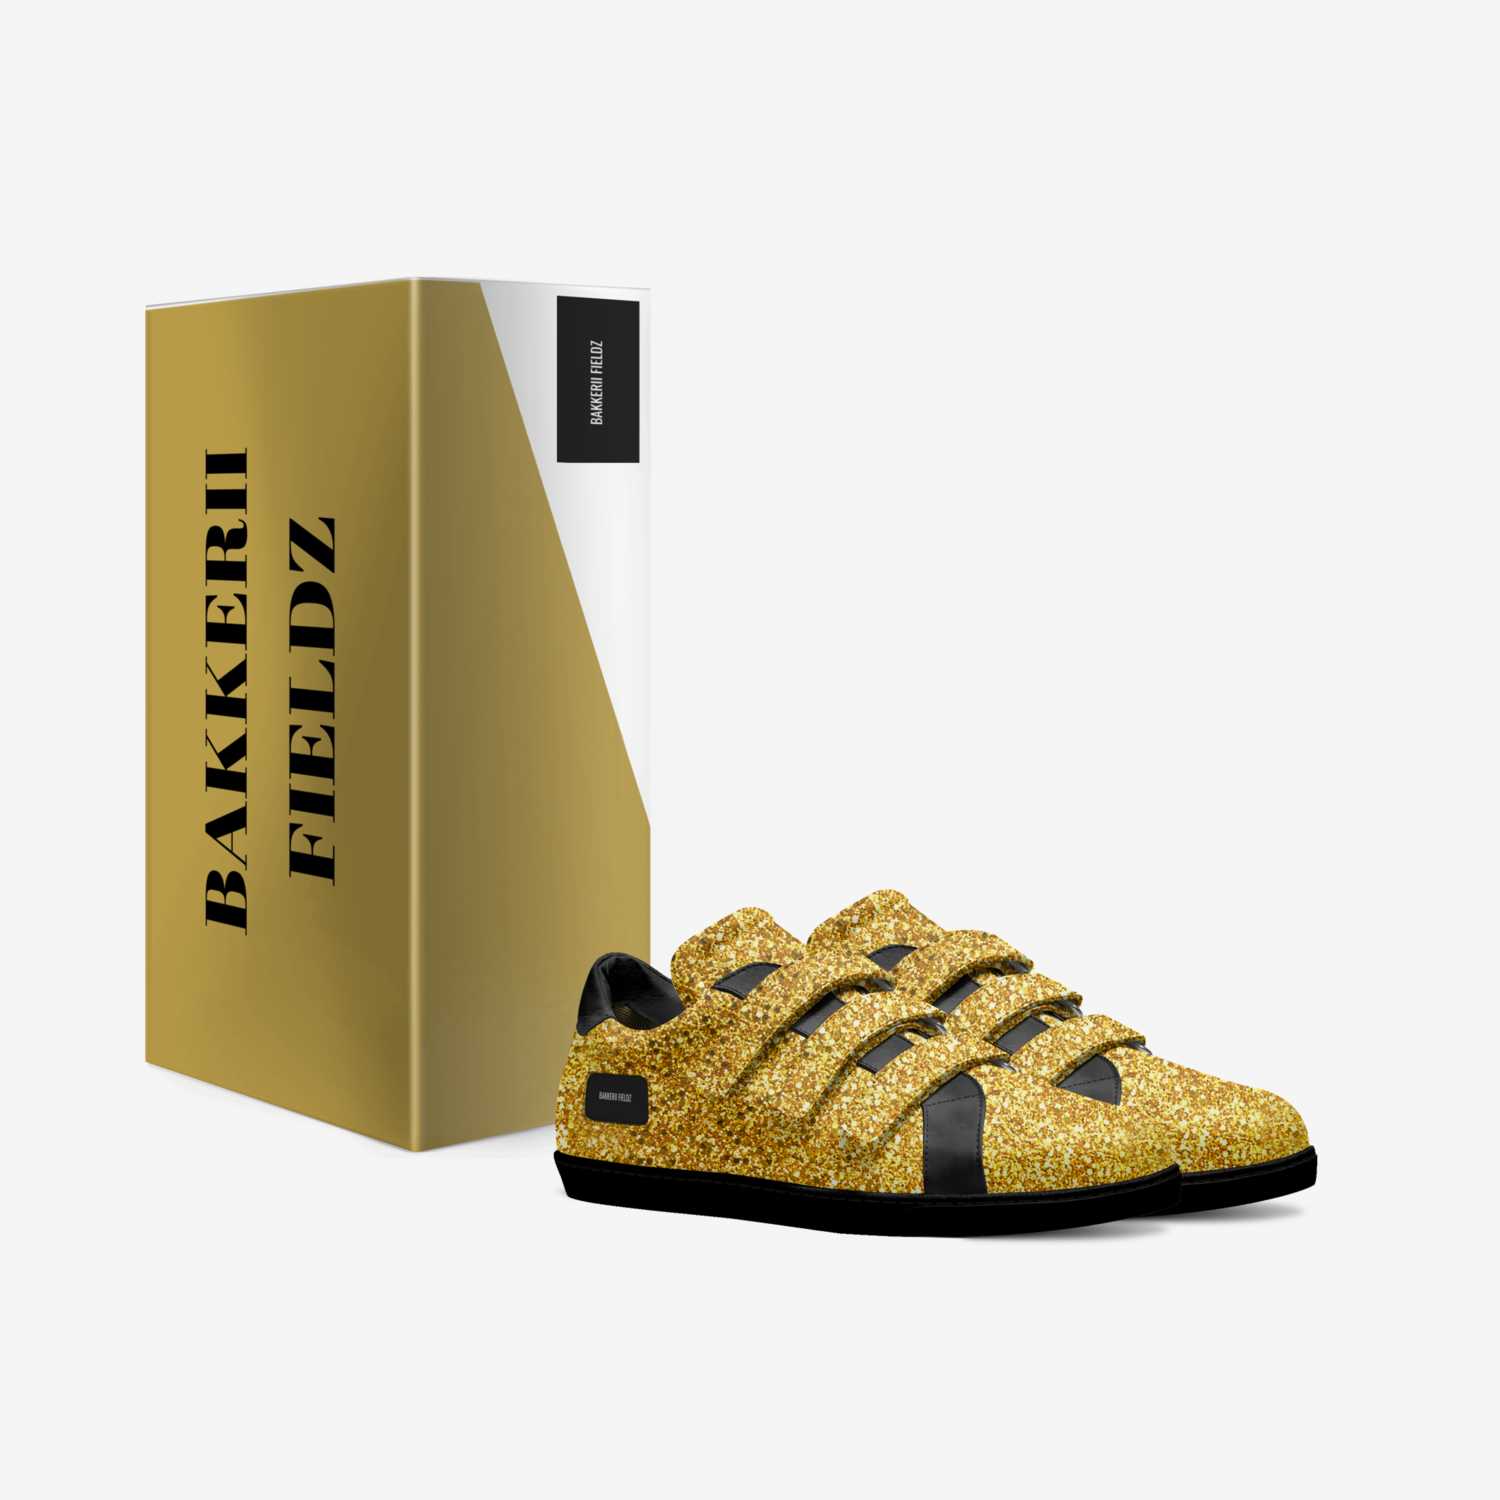 Bakkerii Fieldz  custom made in Italy shoes by Gary Williams | Box view